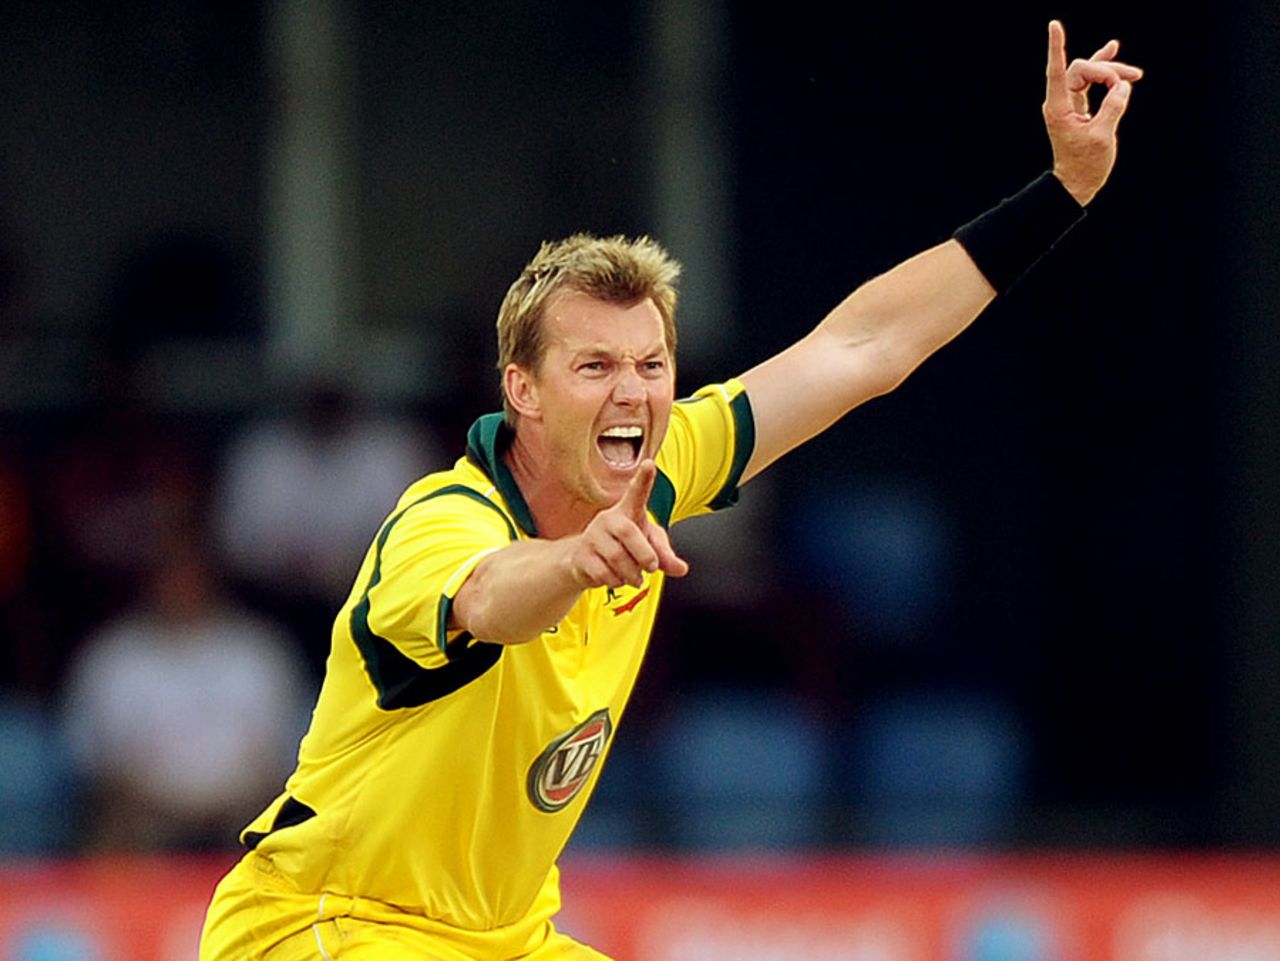 Brett Lee took 3 for 42, West Indies v Australia, 5th ODI, St Lucia, March 25, 2012